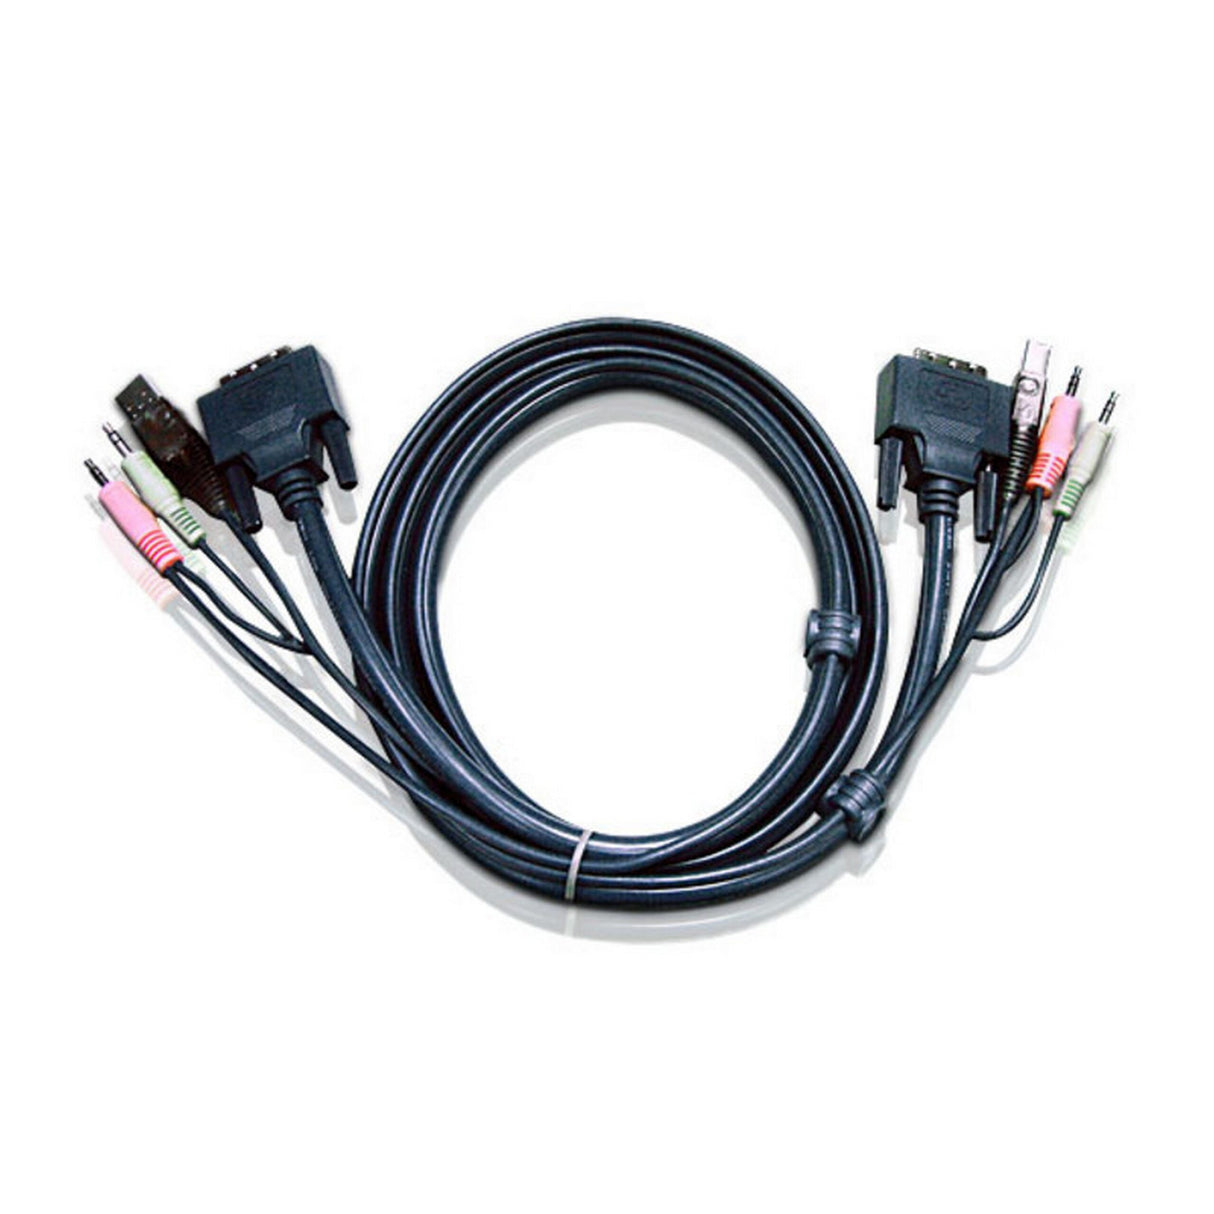 ATEN 2L-7D02U 1.8 Meter USB DVI-D Single Link KVM Cable